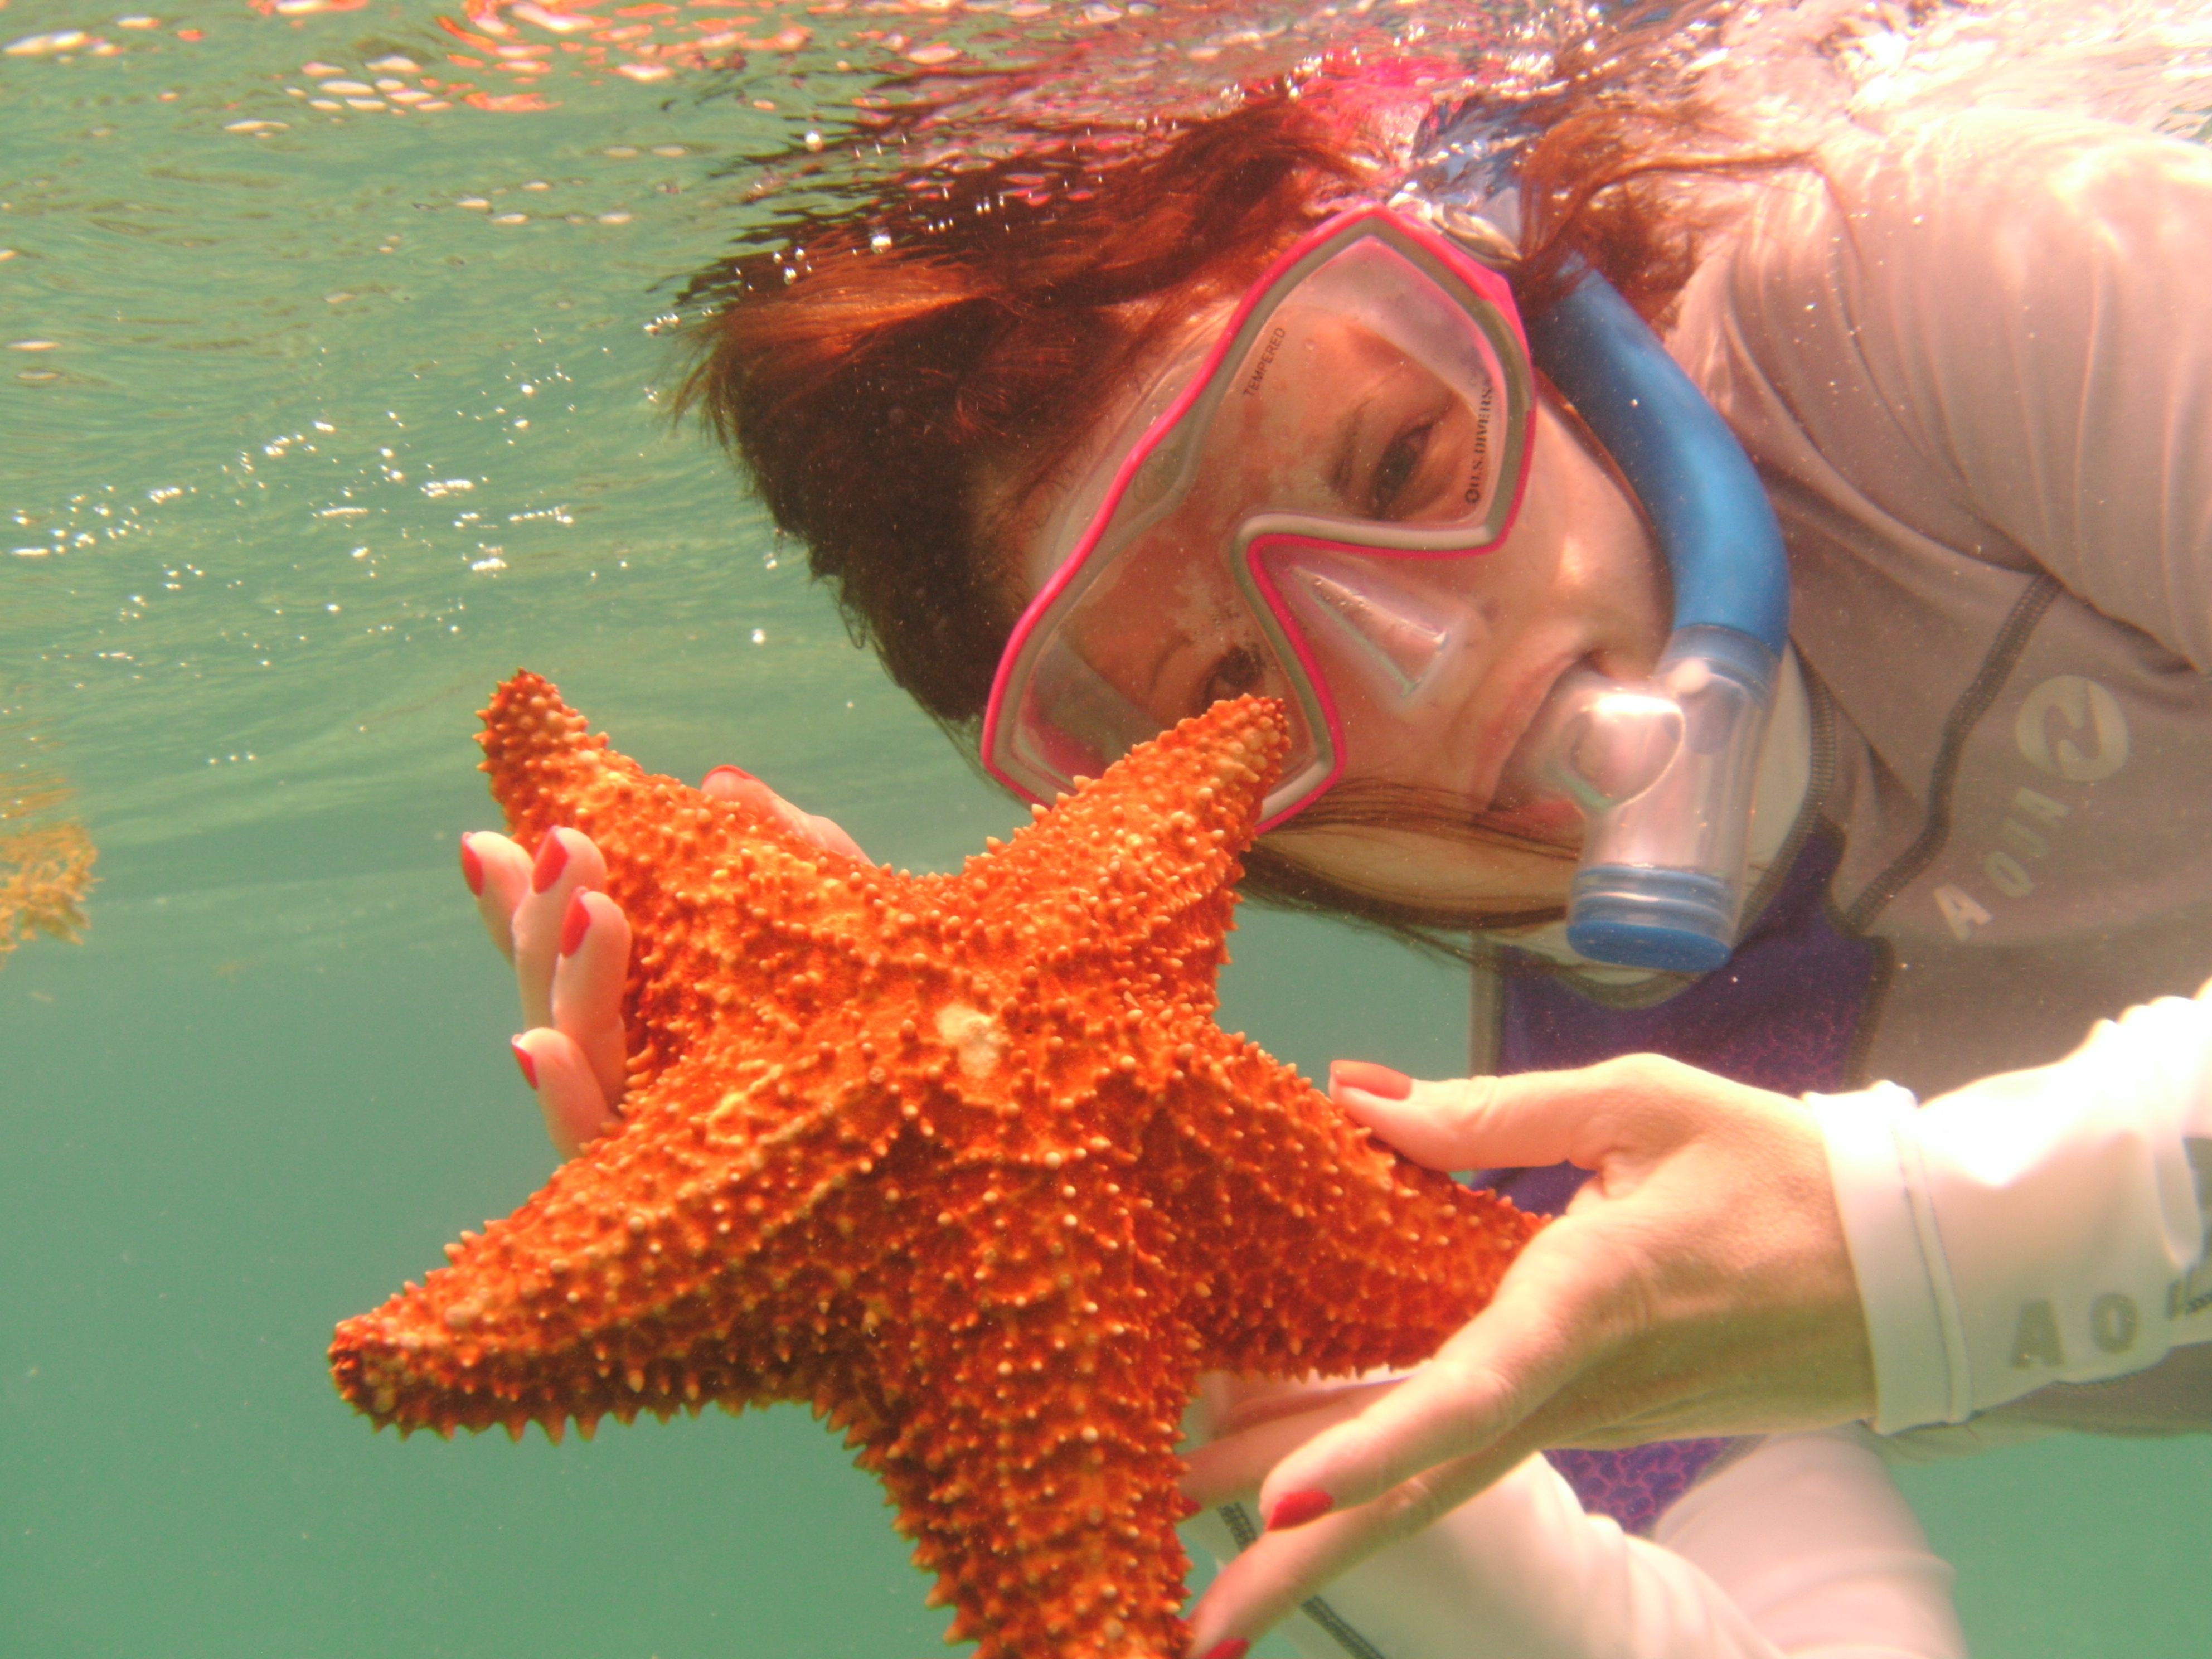 Woman snorkeling and holding an orange starfish.